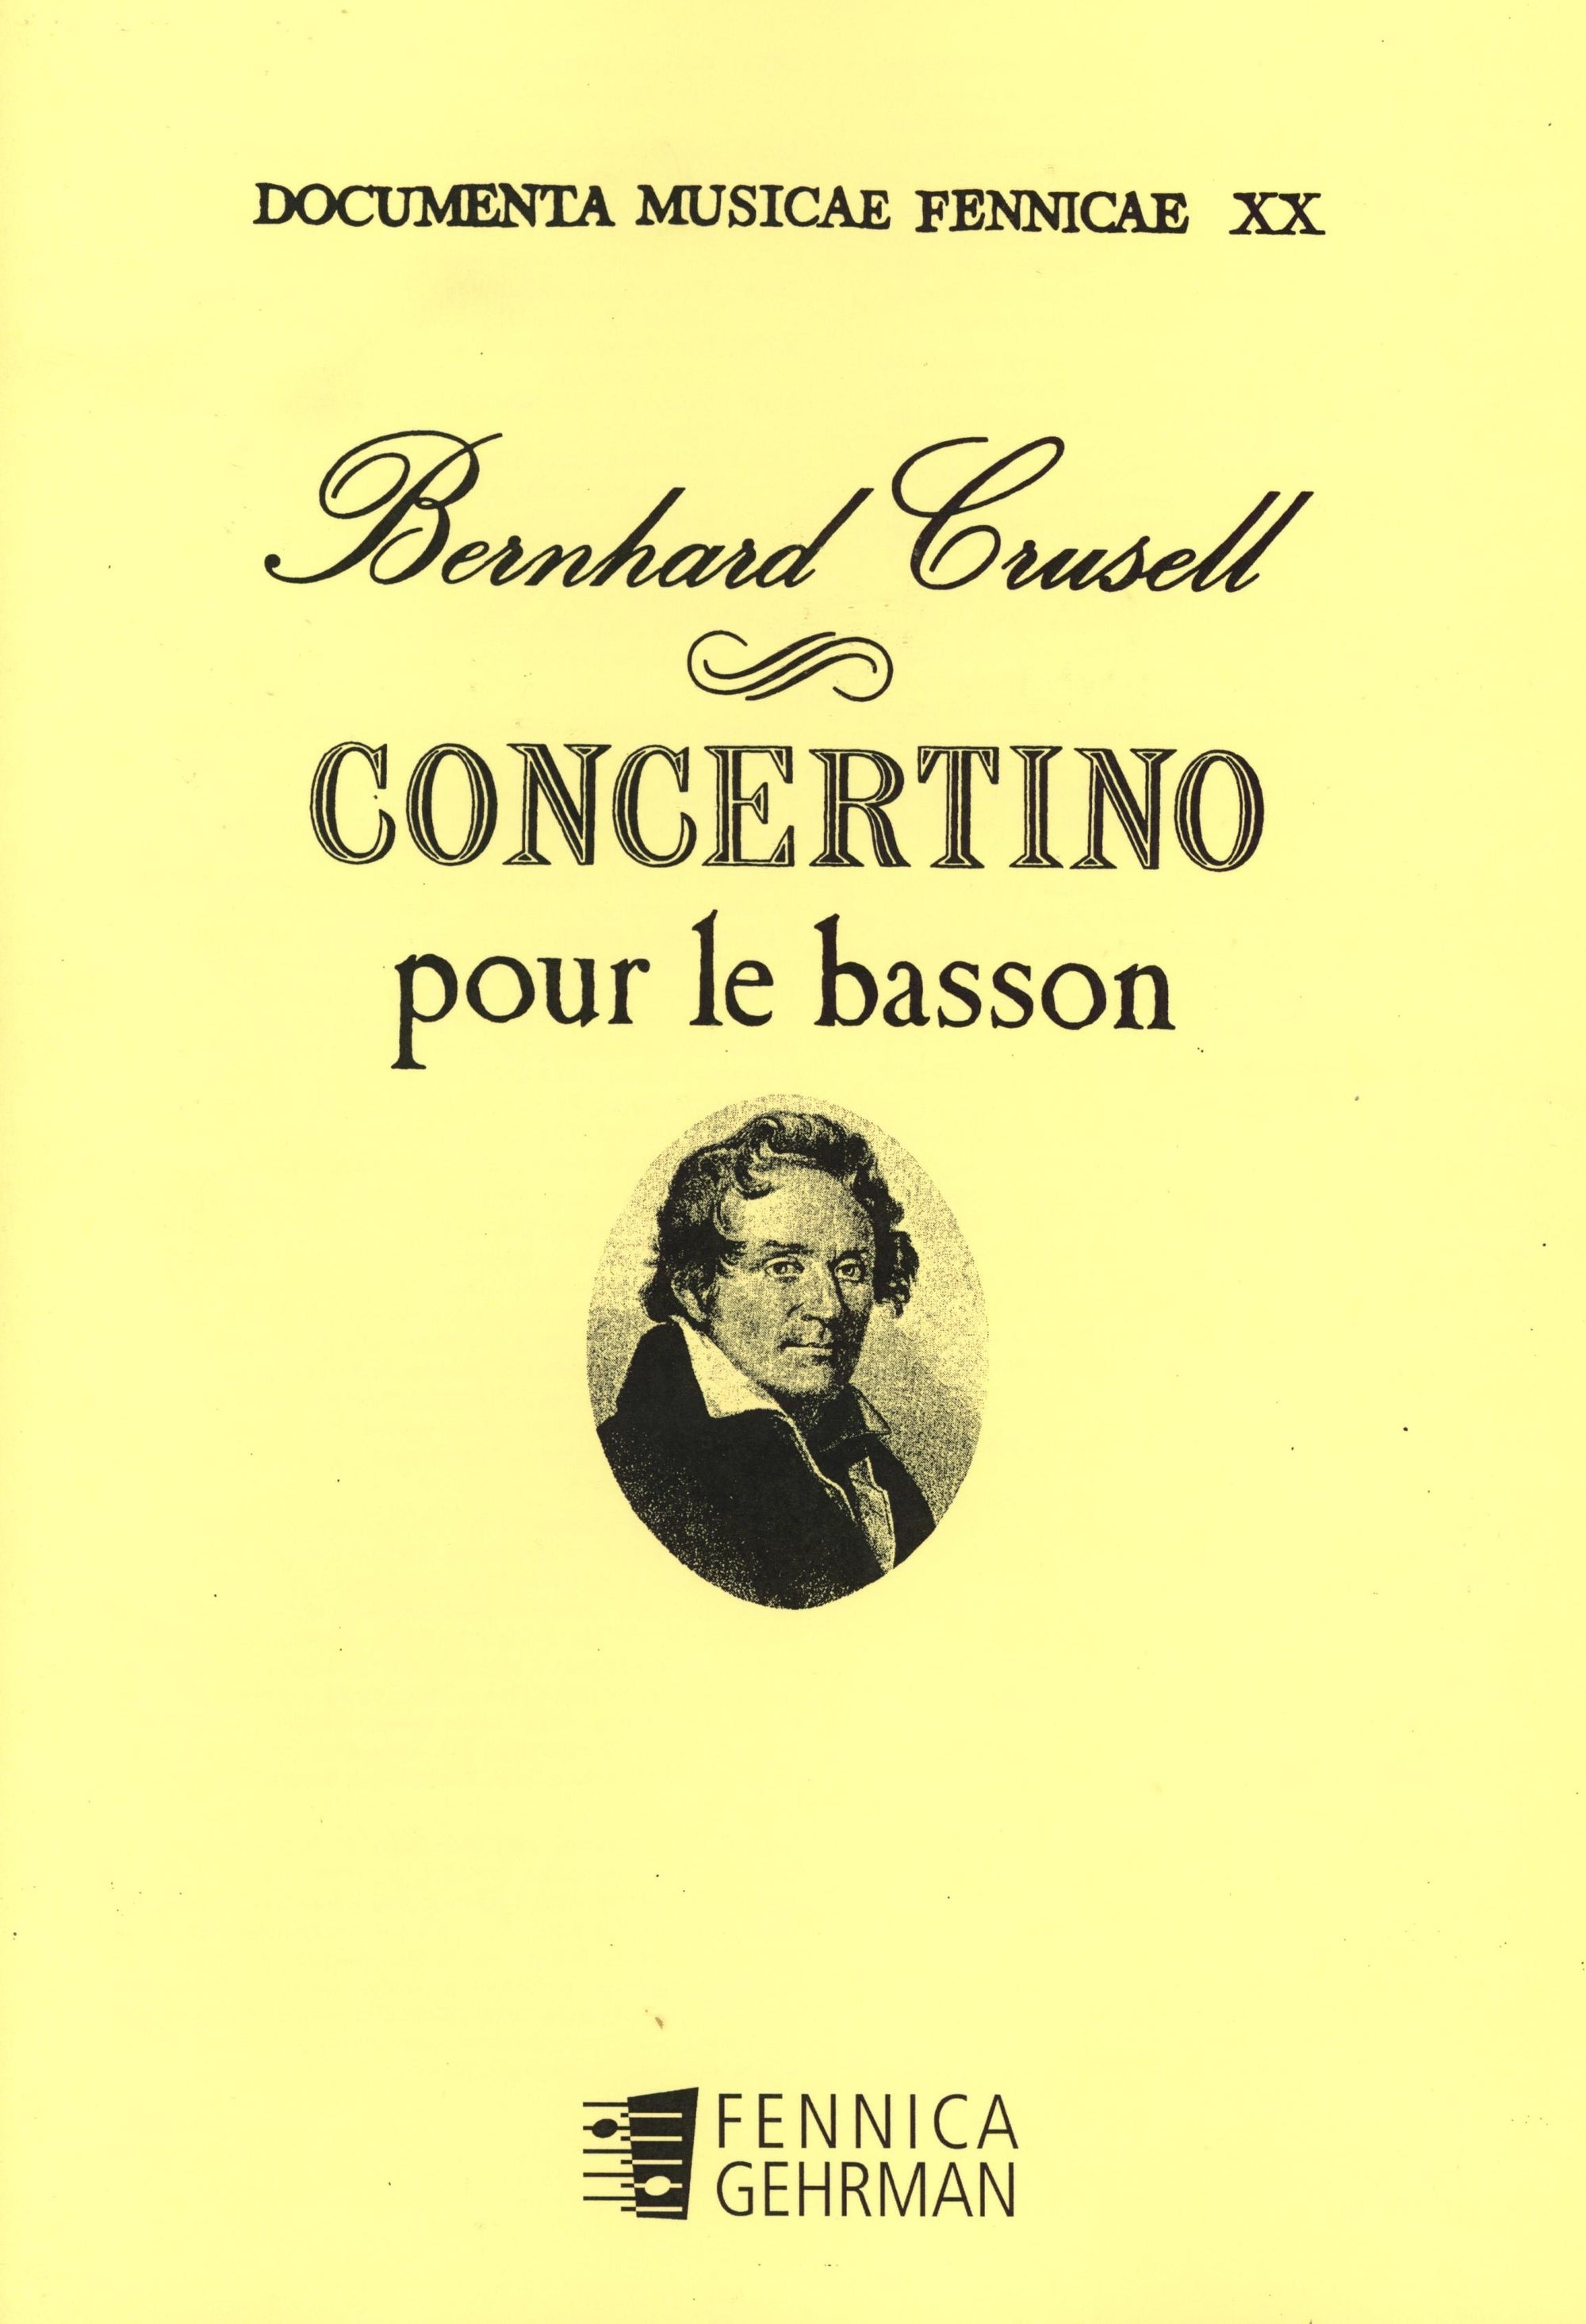 Crusell: Bassoon Concertino in B-flat Major